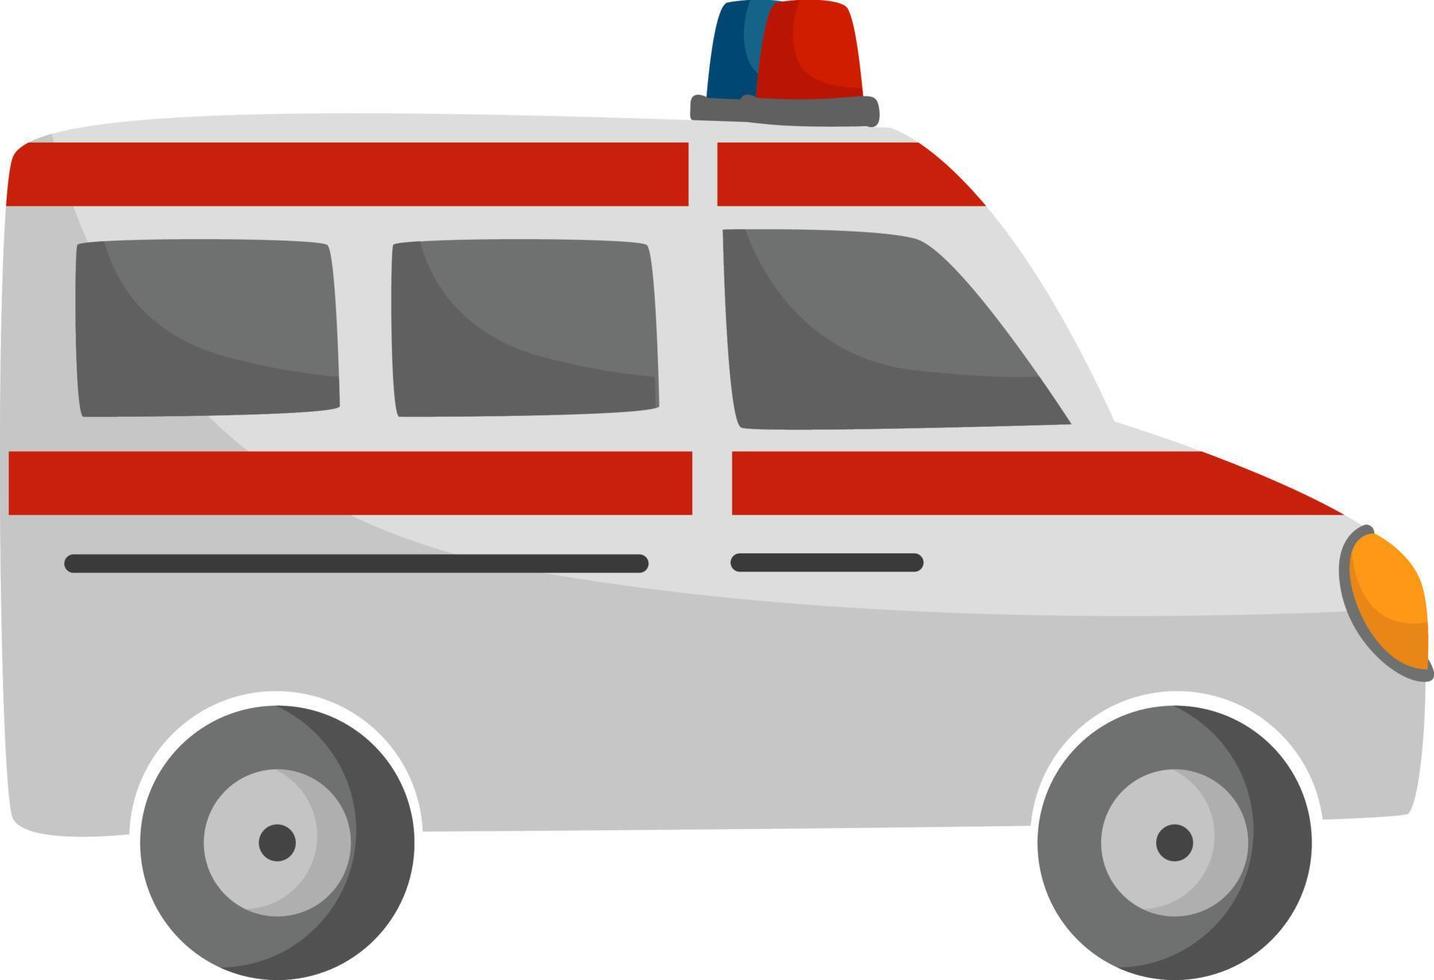 Ambulance car, illustration, vector on white background